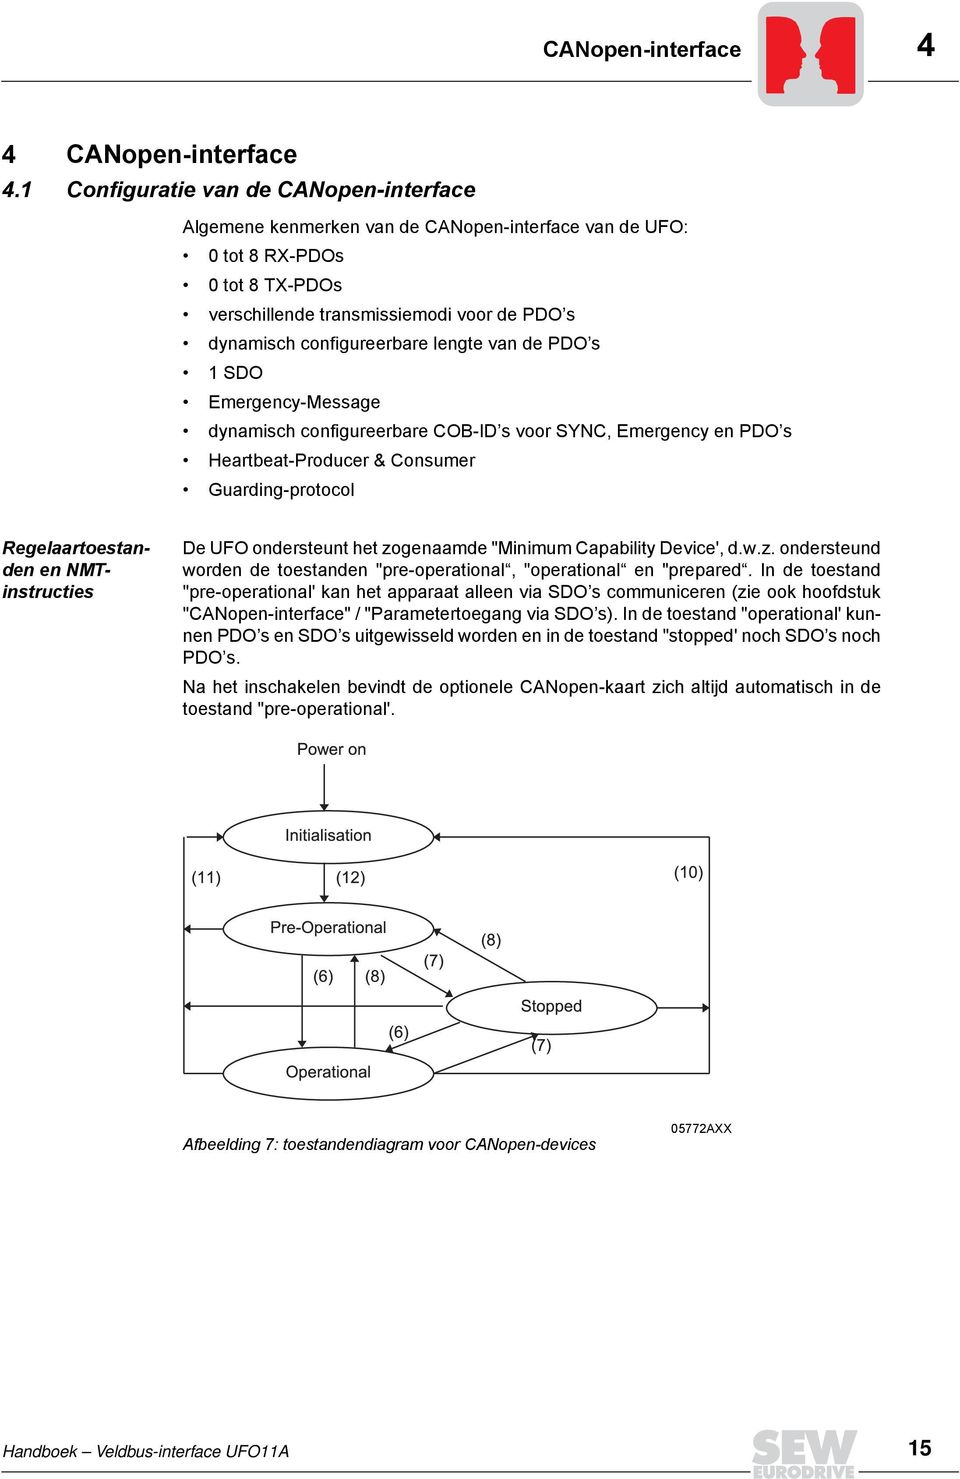 lengte van de PDO s 1 SDO Emergency-Message dynamisch configureerbare COB-ID s voor SYNC, Emergency en PDO s Heartbeat-Producer & Consumer Guarding-protocol Regelaartoestanden en NMTinstructies De